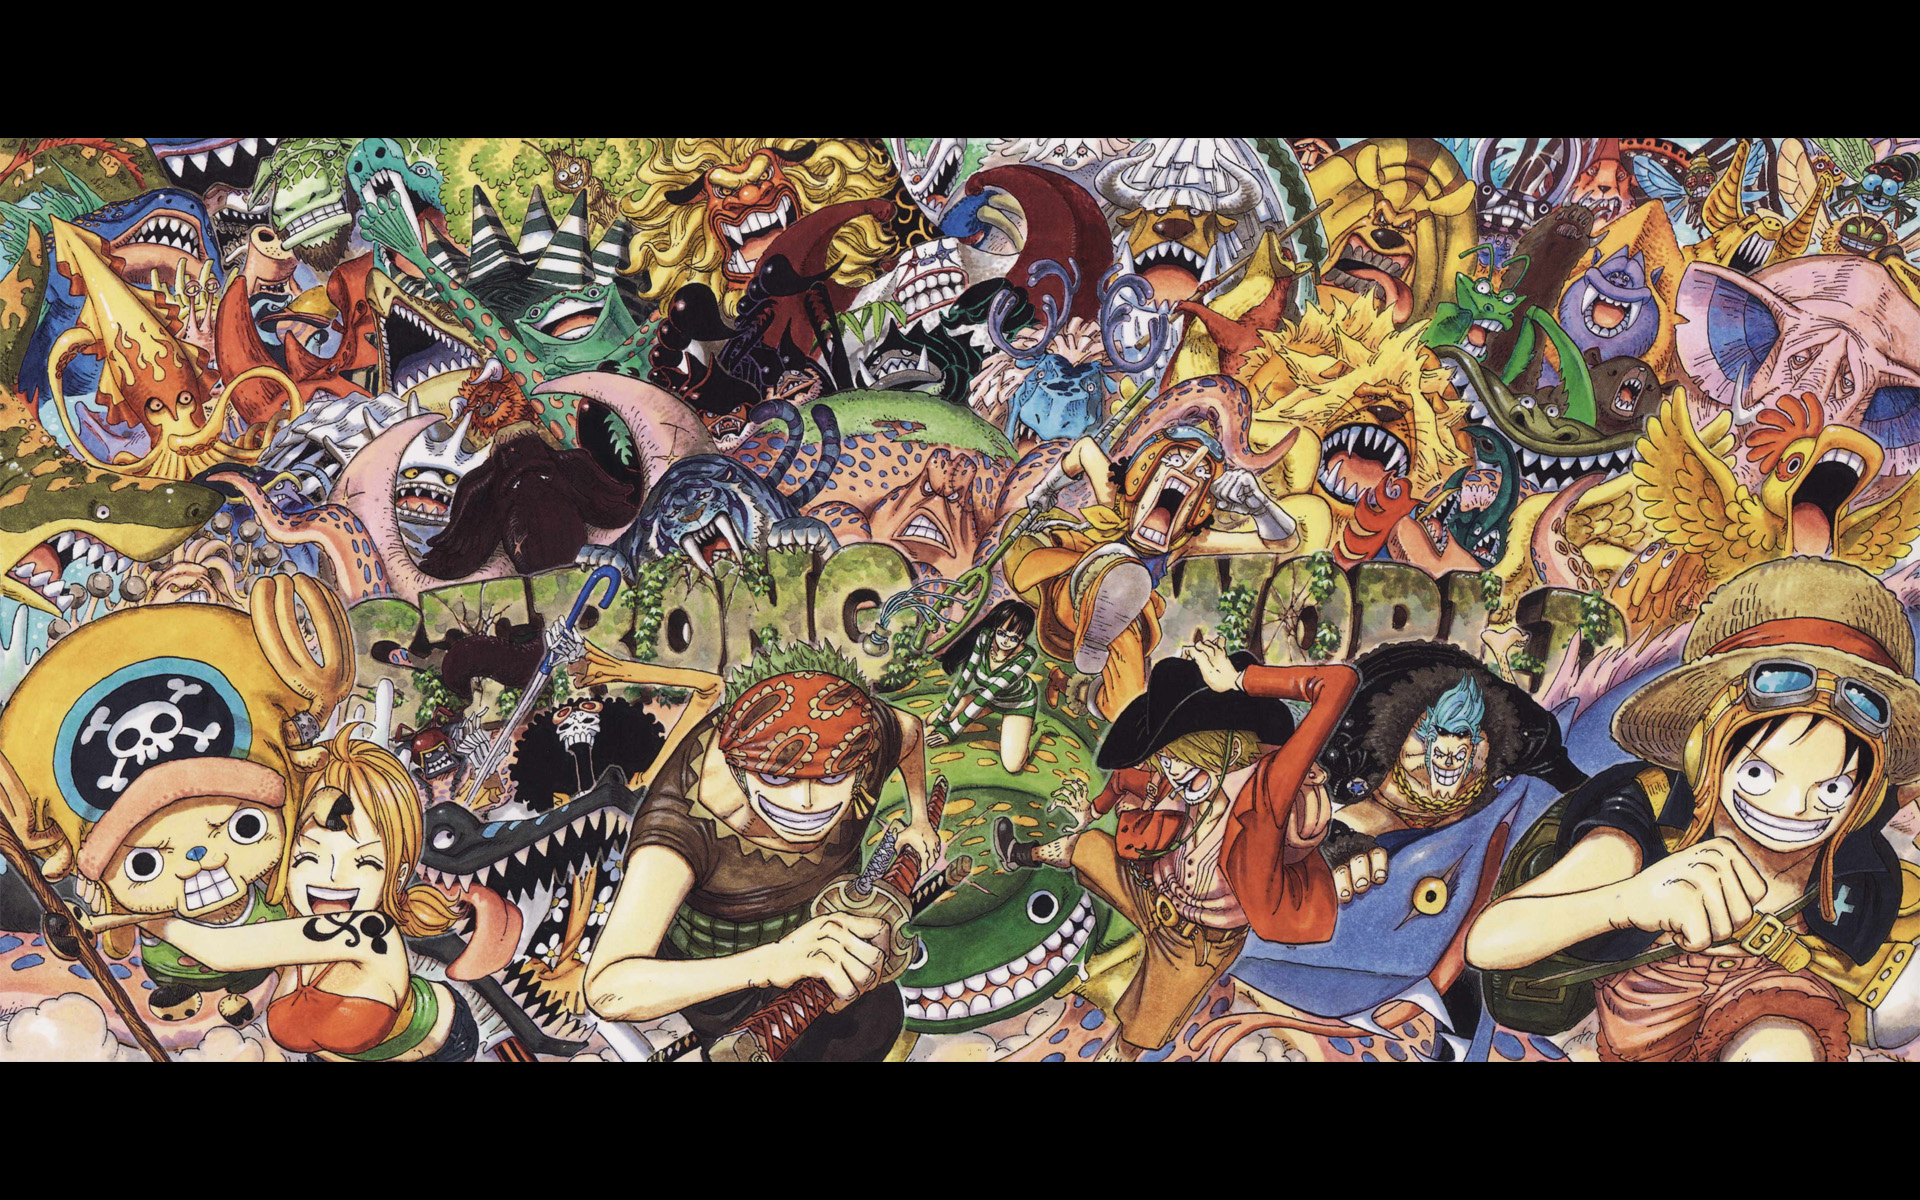 One Piece (anime), Roronoa Zoro, chopper, Monkey D Luffy, Nami (One Piece) - desktop wallpaper